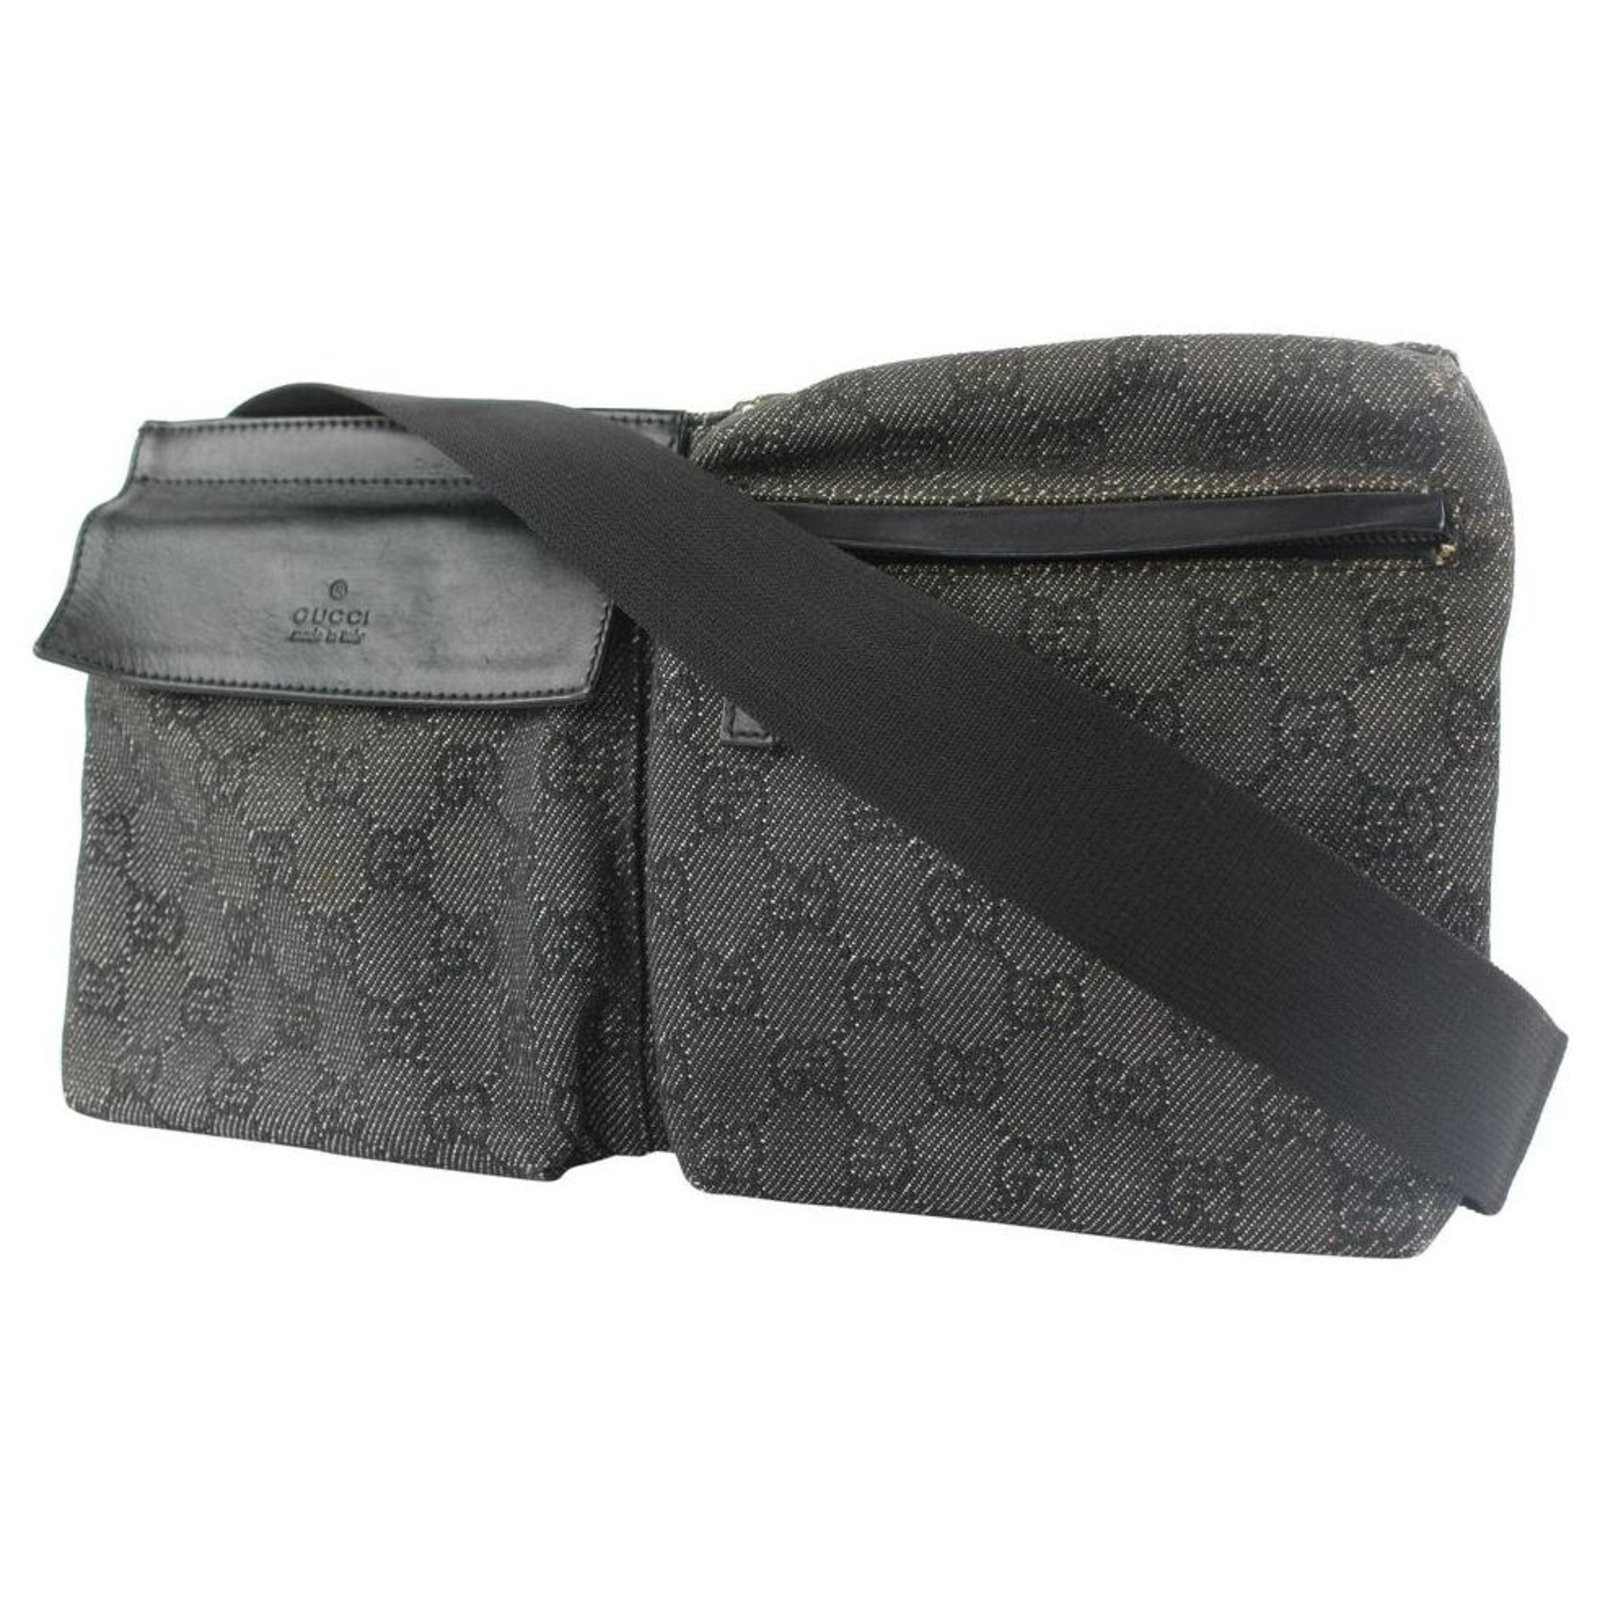 Gucci Drops a Vintage-Style Leather Belt Bag